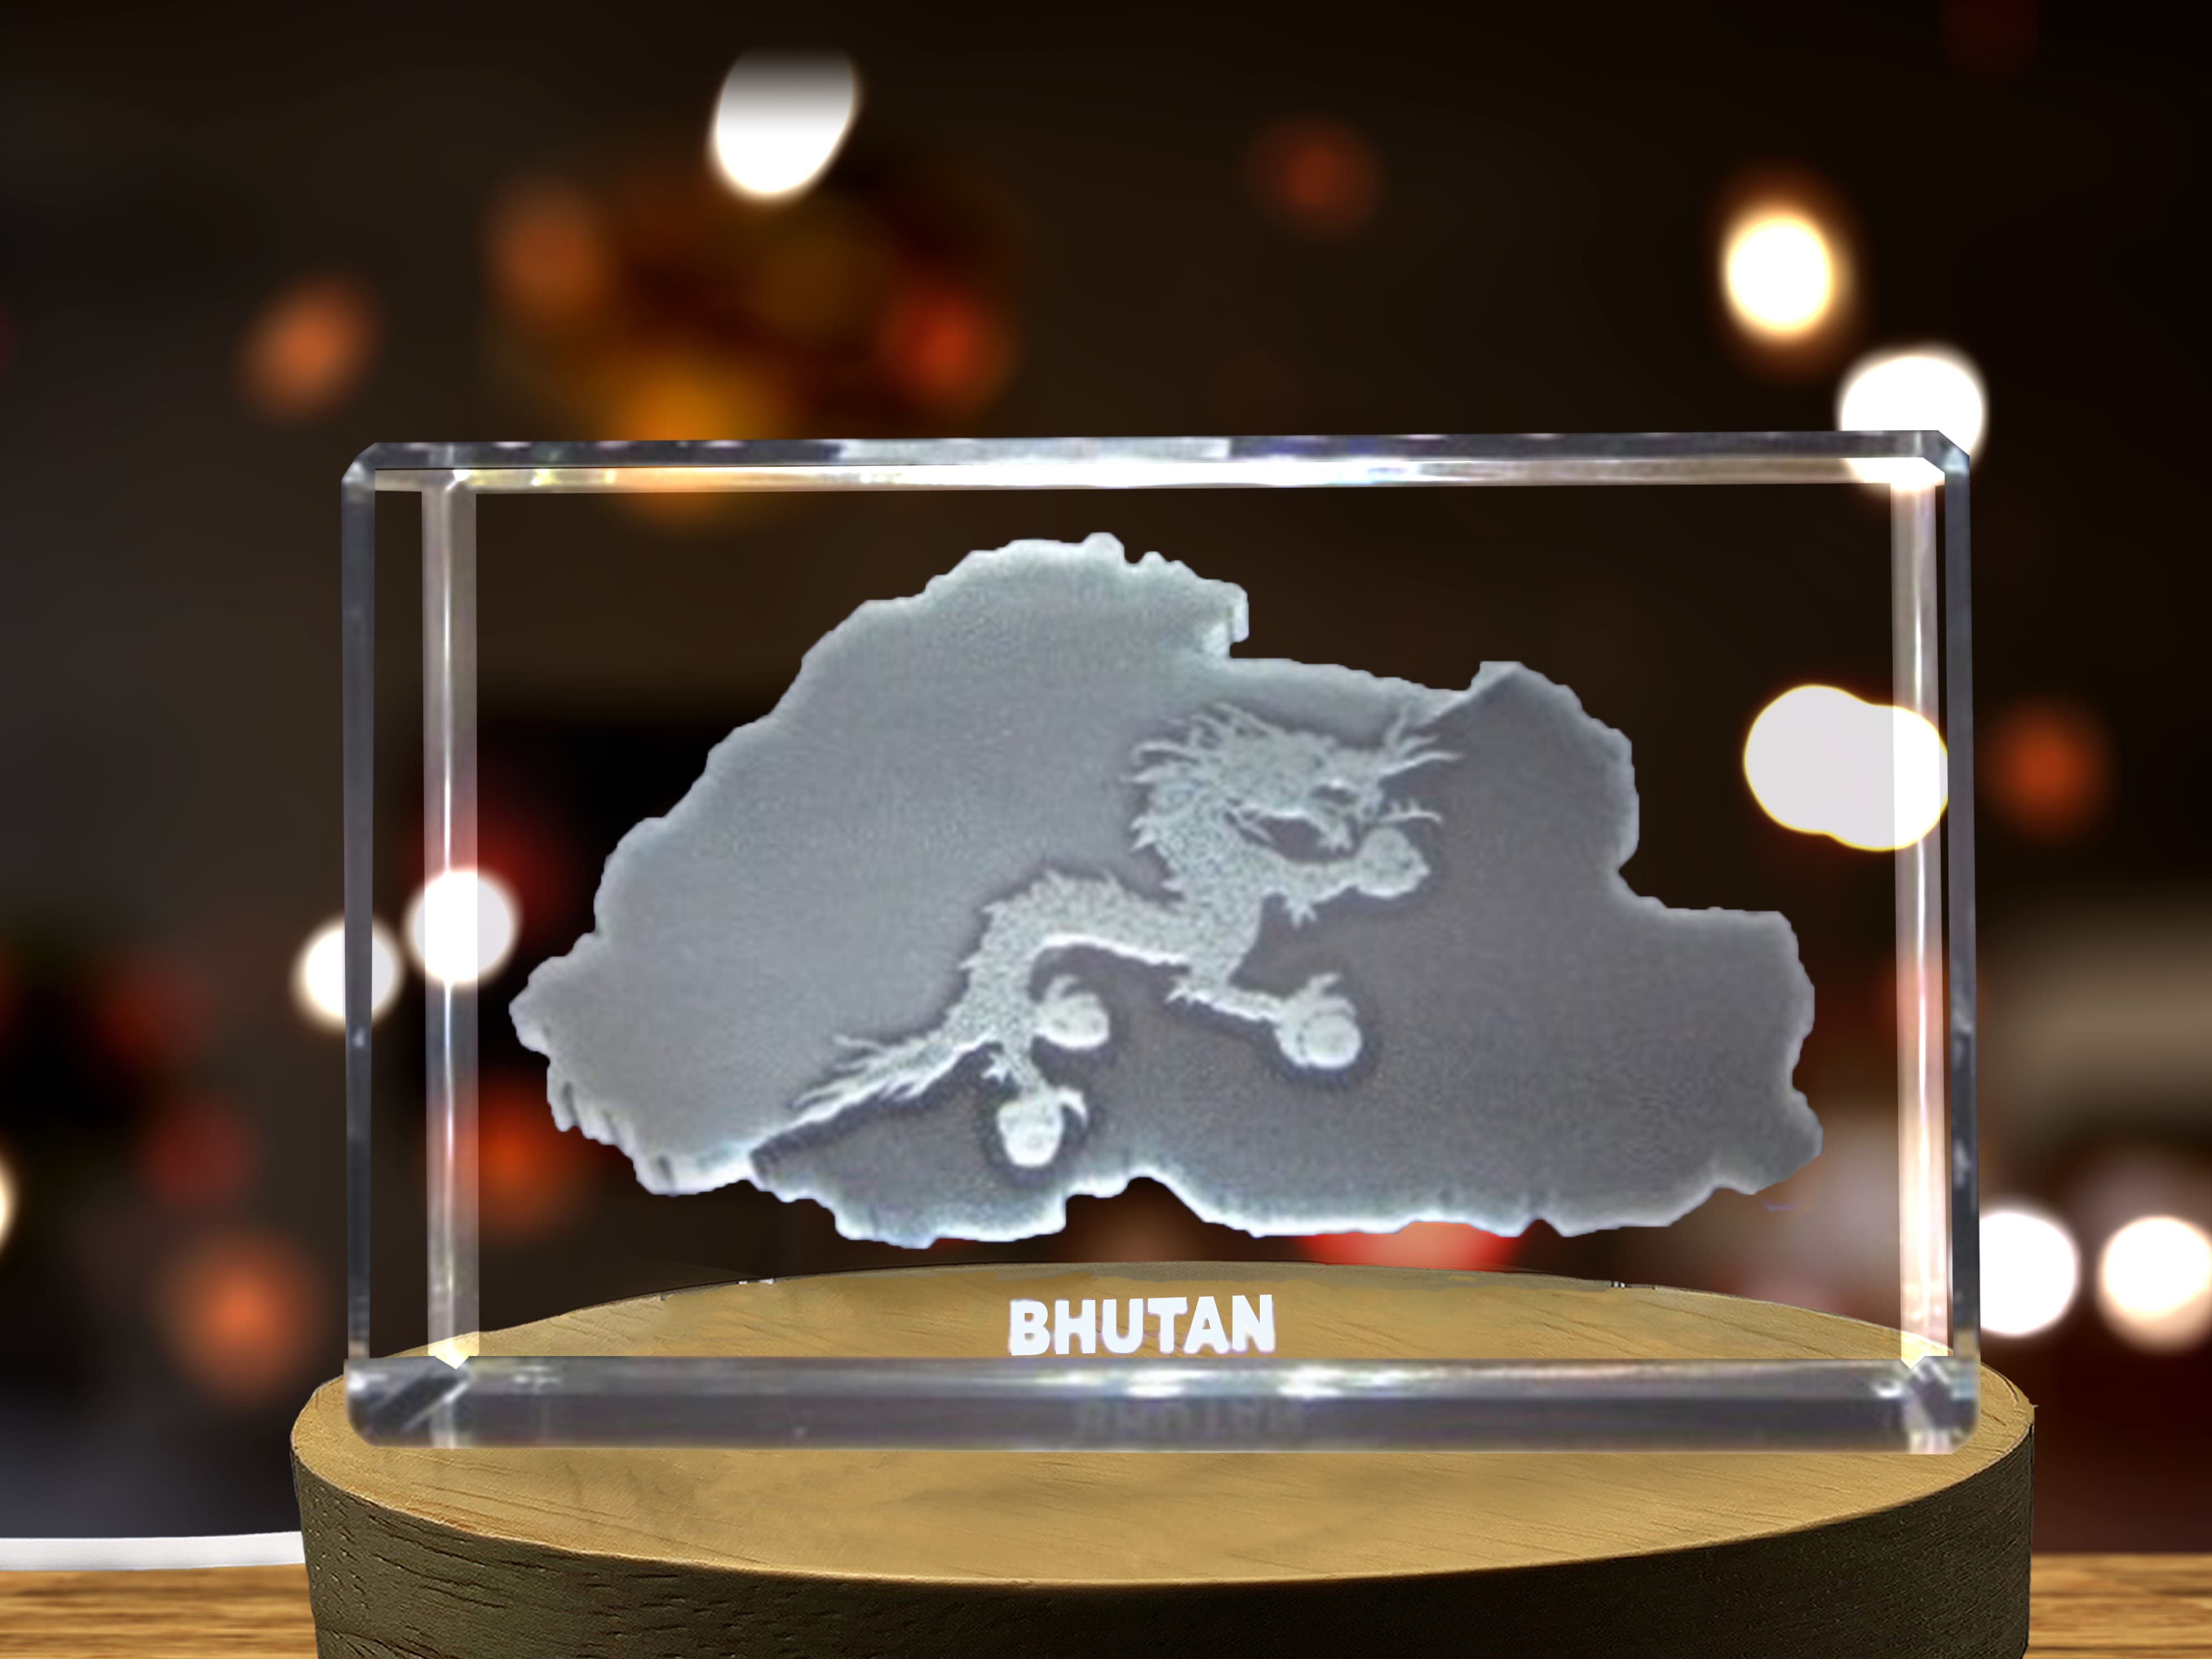 Bhutan 3D Engraved Crystal 3D Engraved Crystal Keepsake/Gift/Decor/Collectible/Souvenir A&B Crystal Collection